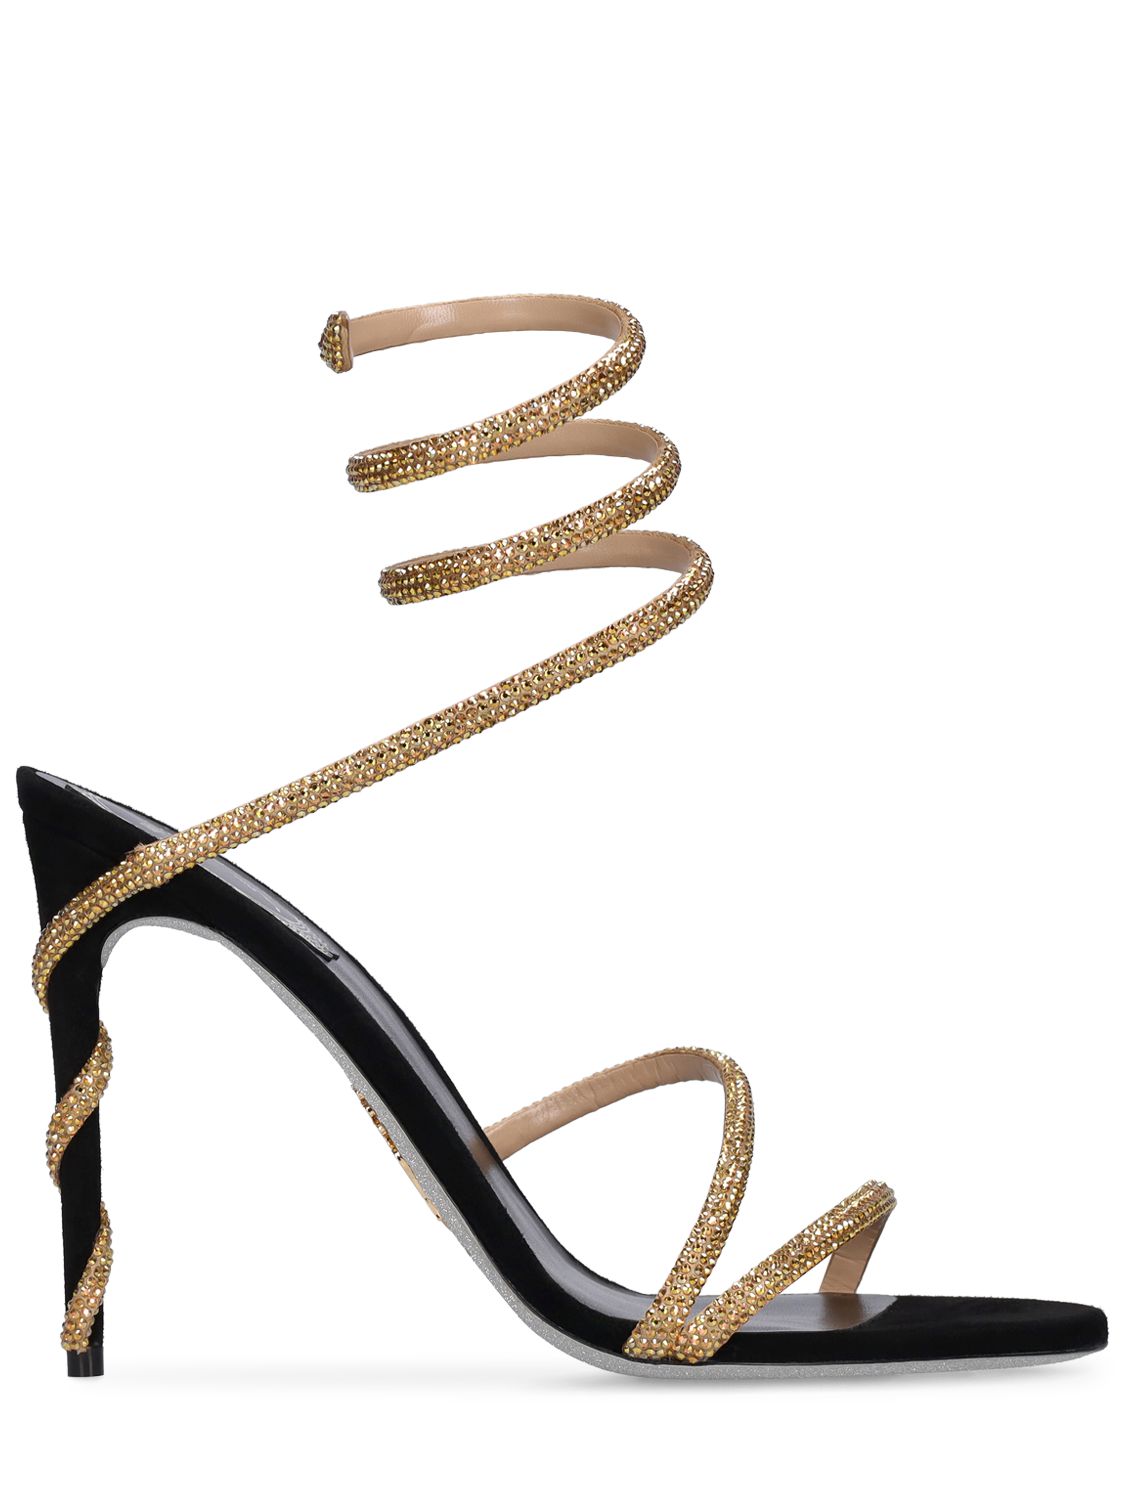 René Caovilla 105mm Satin & Crystal High Heel Sandals In Black,gold